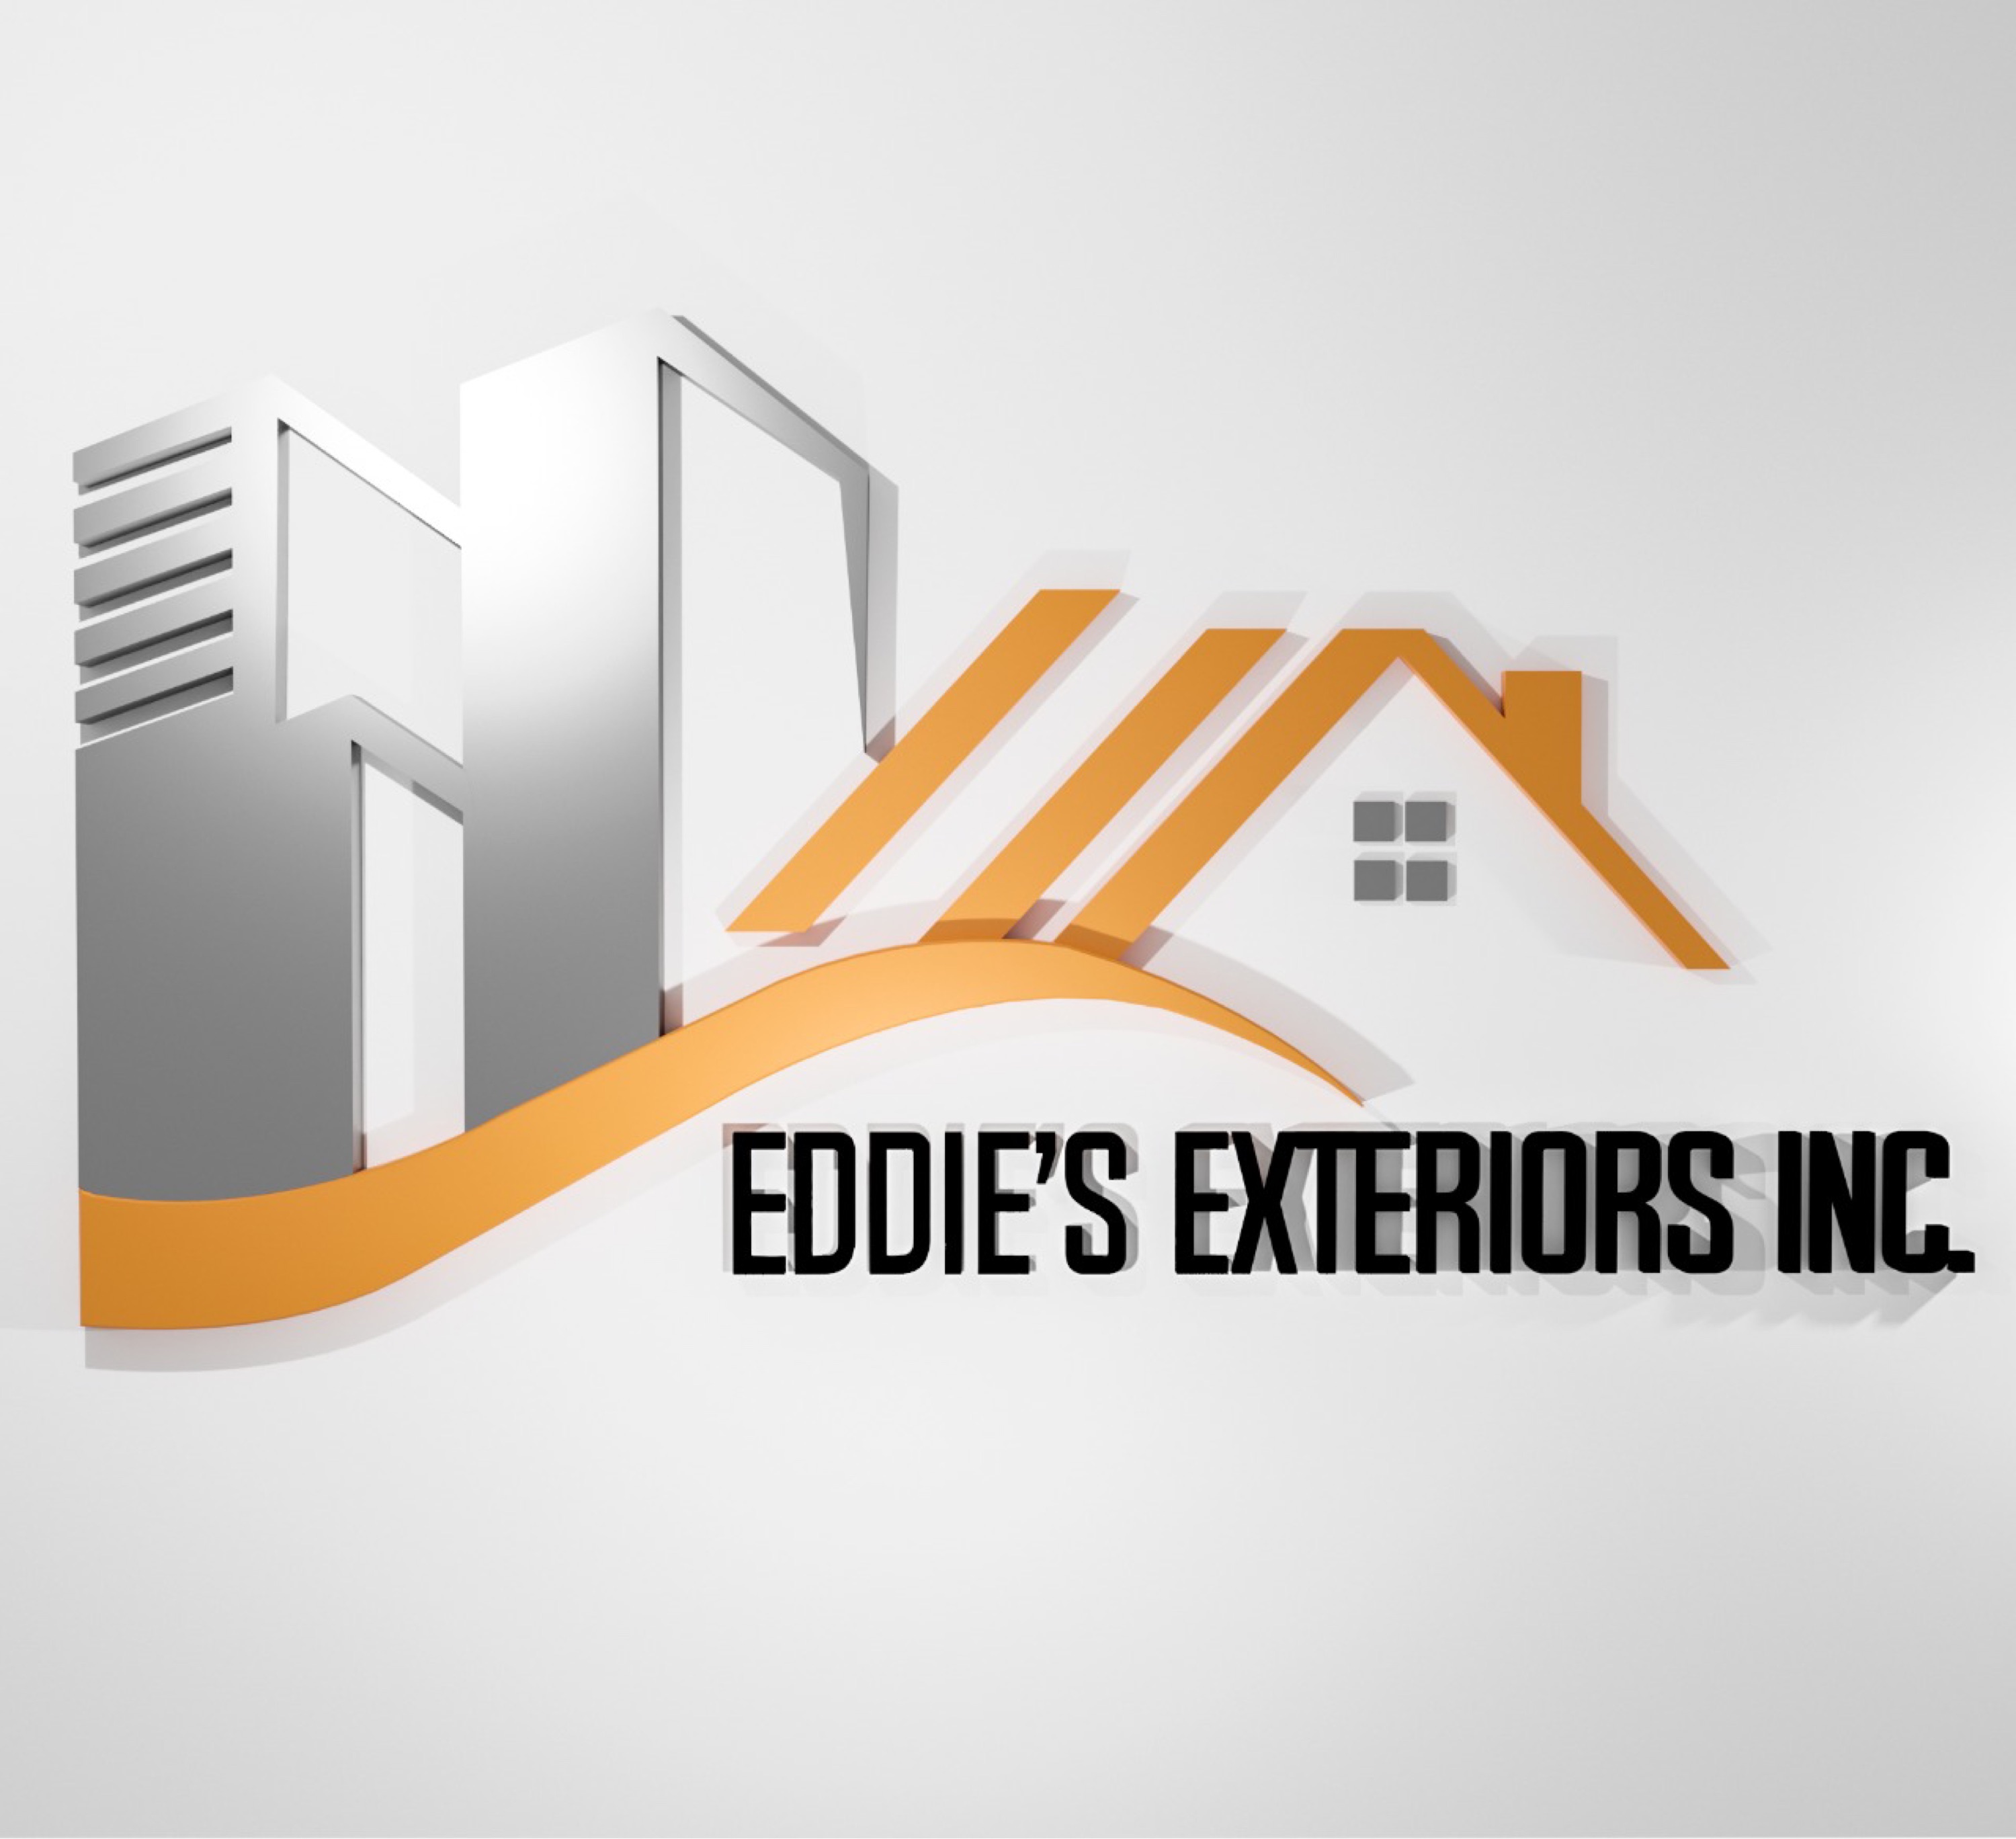 Eddie's Roofing & Exteriors, Inc. Logo